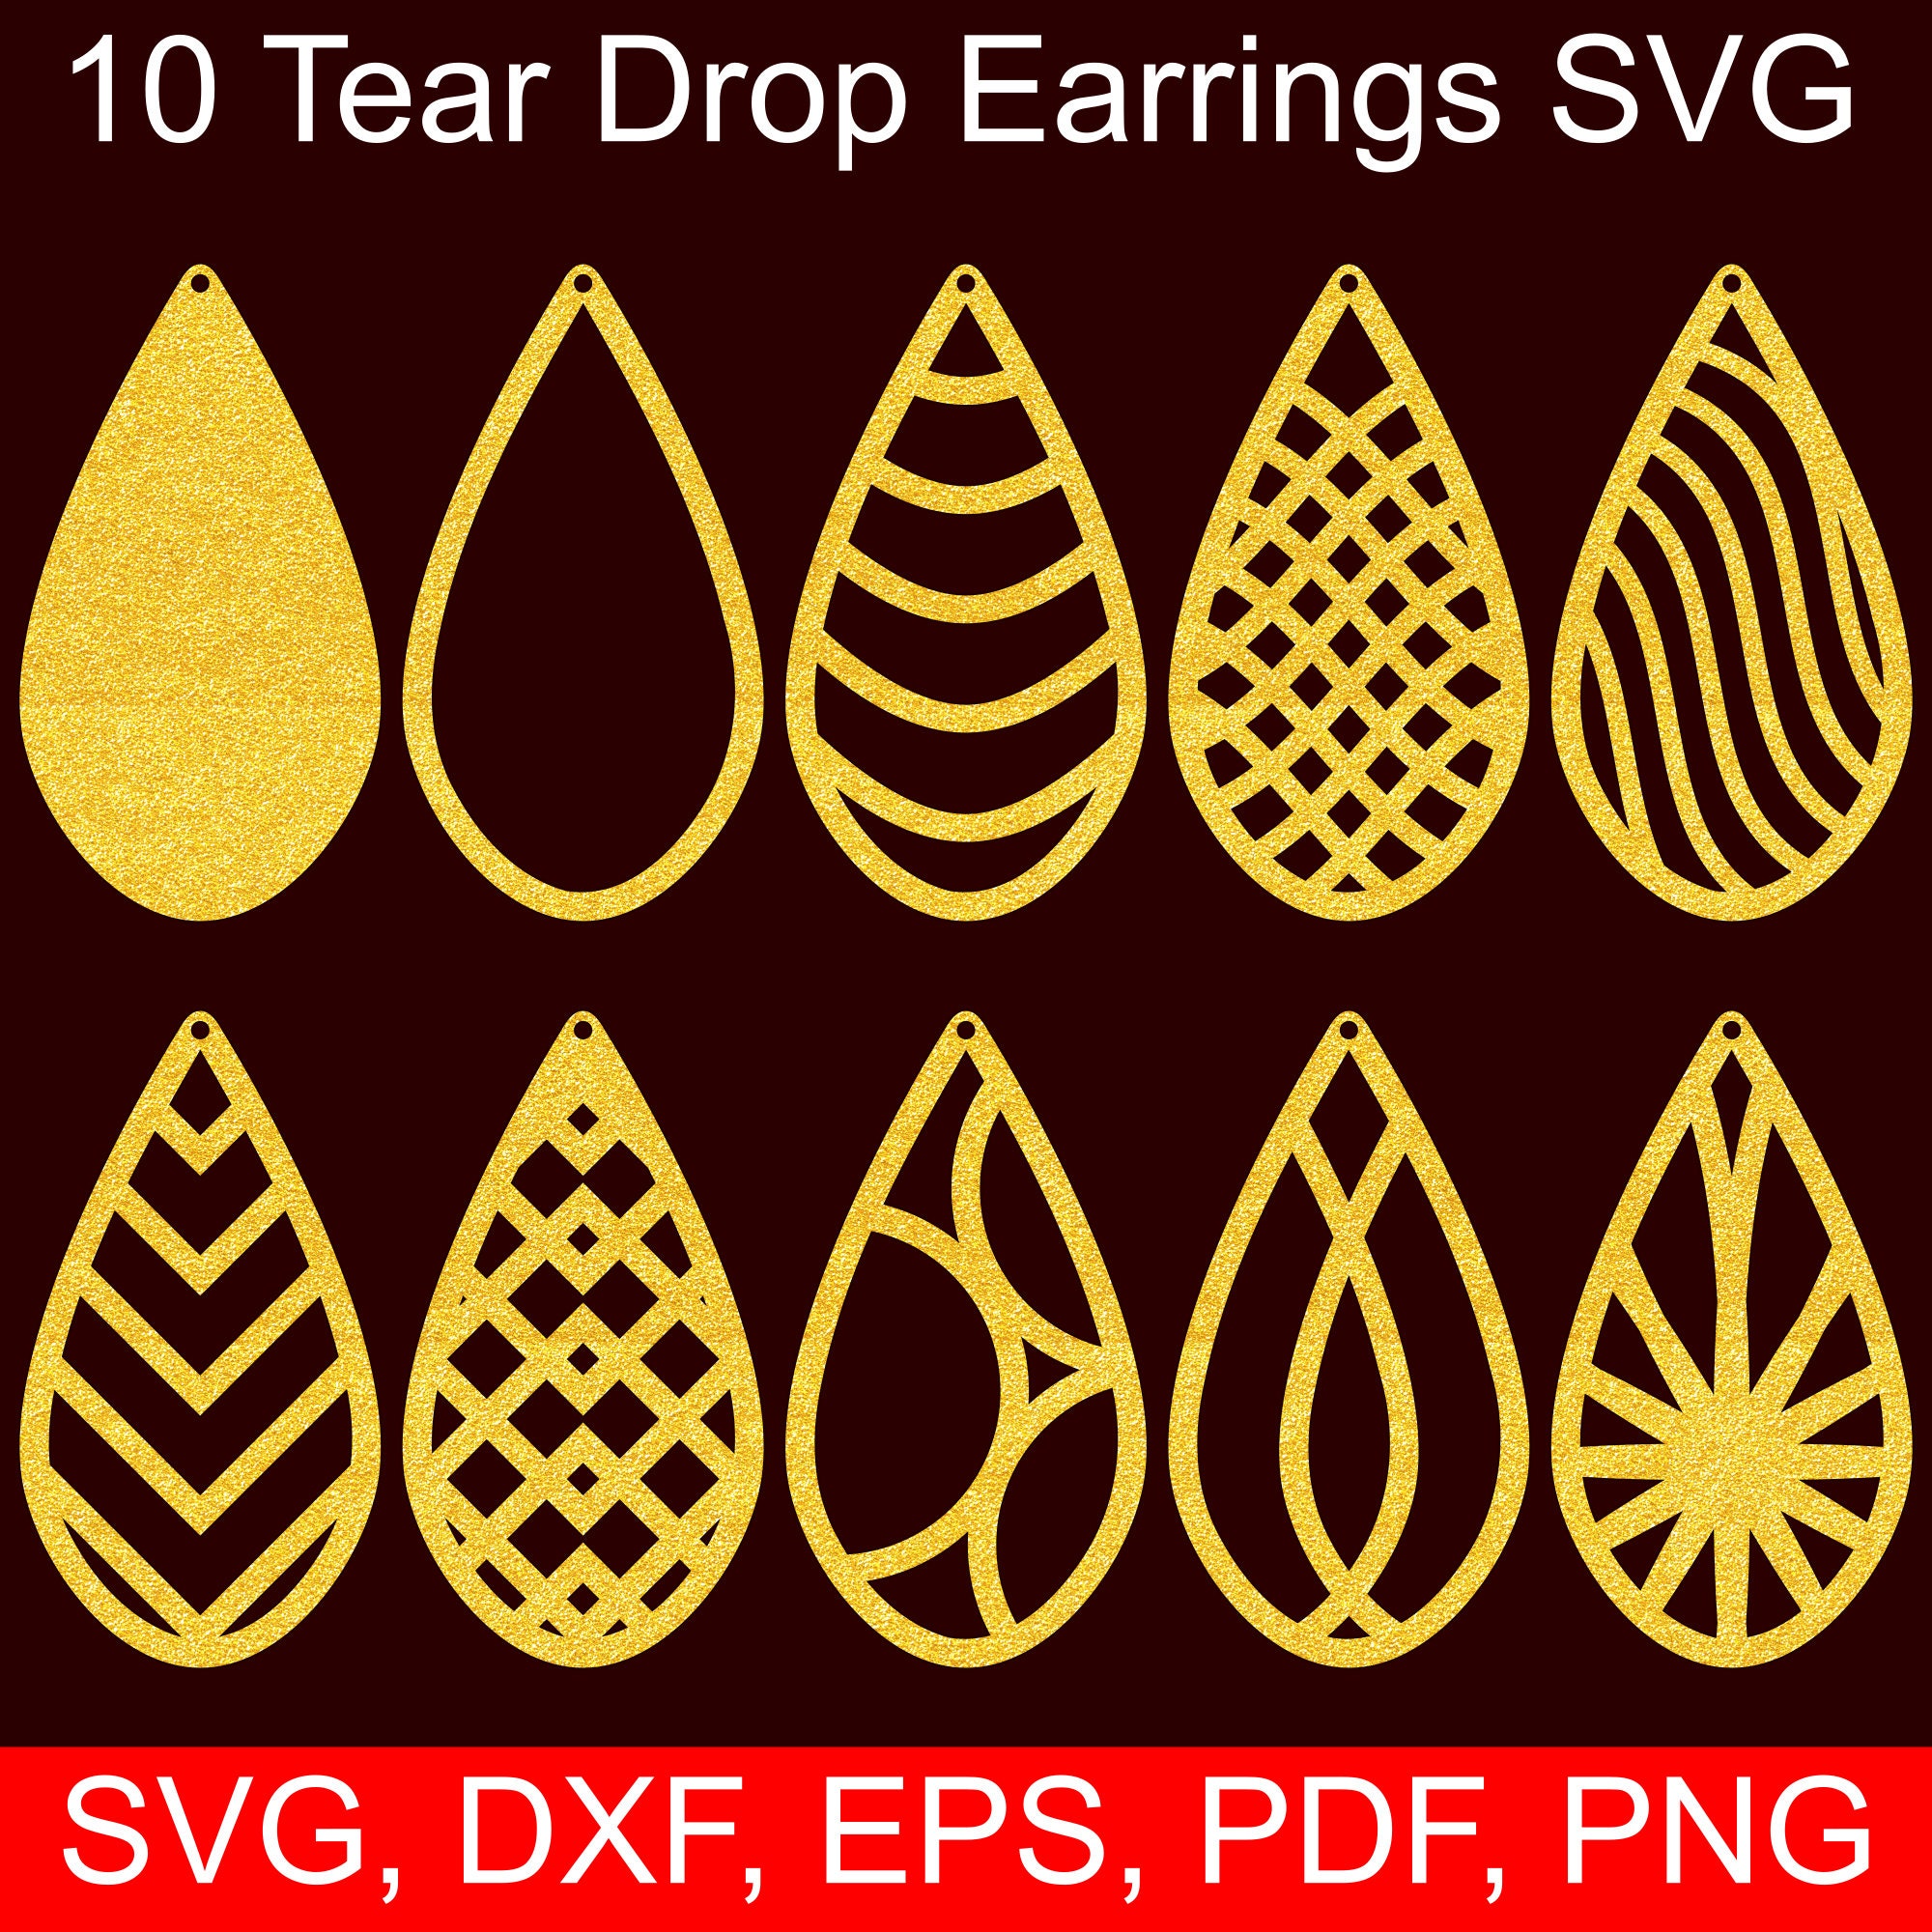 Download 10 Tear Drop Earrings Svg Files Tear Drop Svg Cut Files For Cricut Silhouette Laser Cut Svg Earrings Template With Holes Earring Svgs